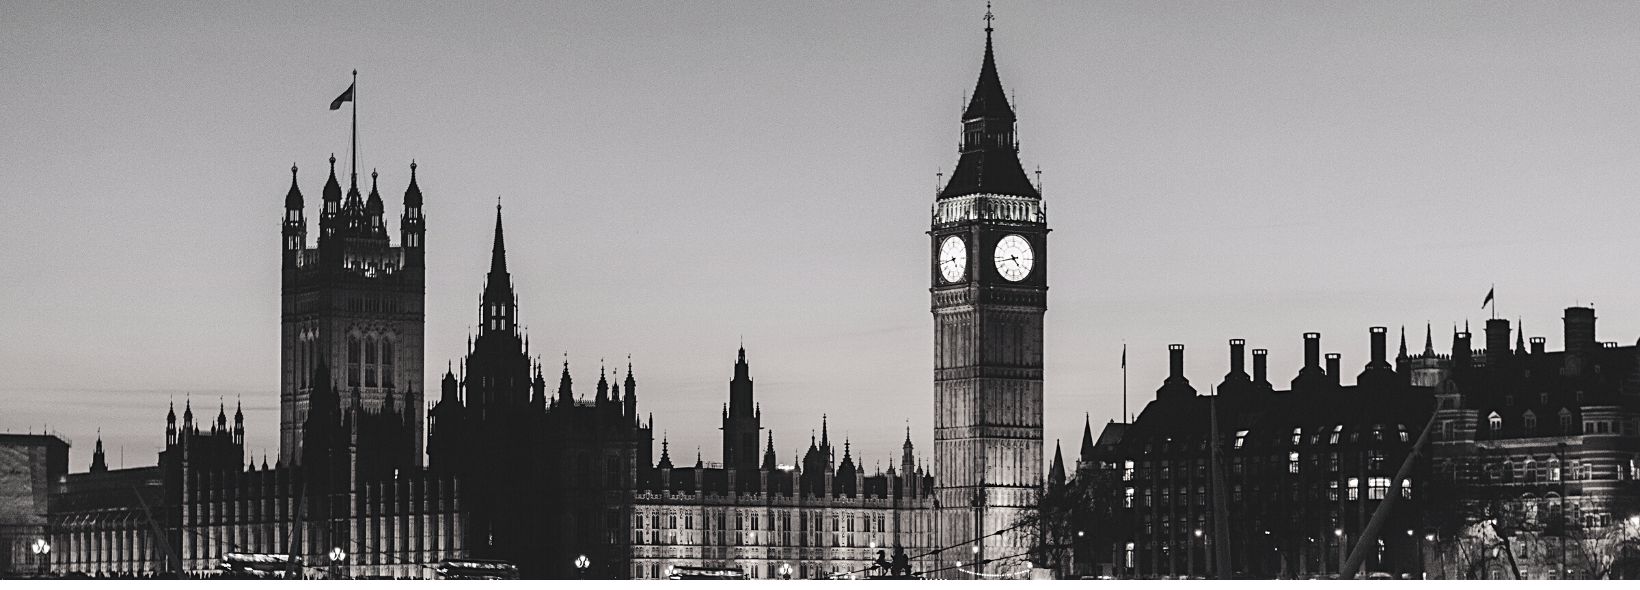 Black and white panoramic image of Big Ben & parliament